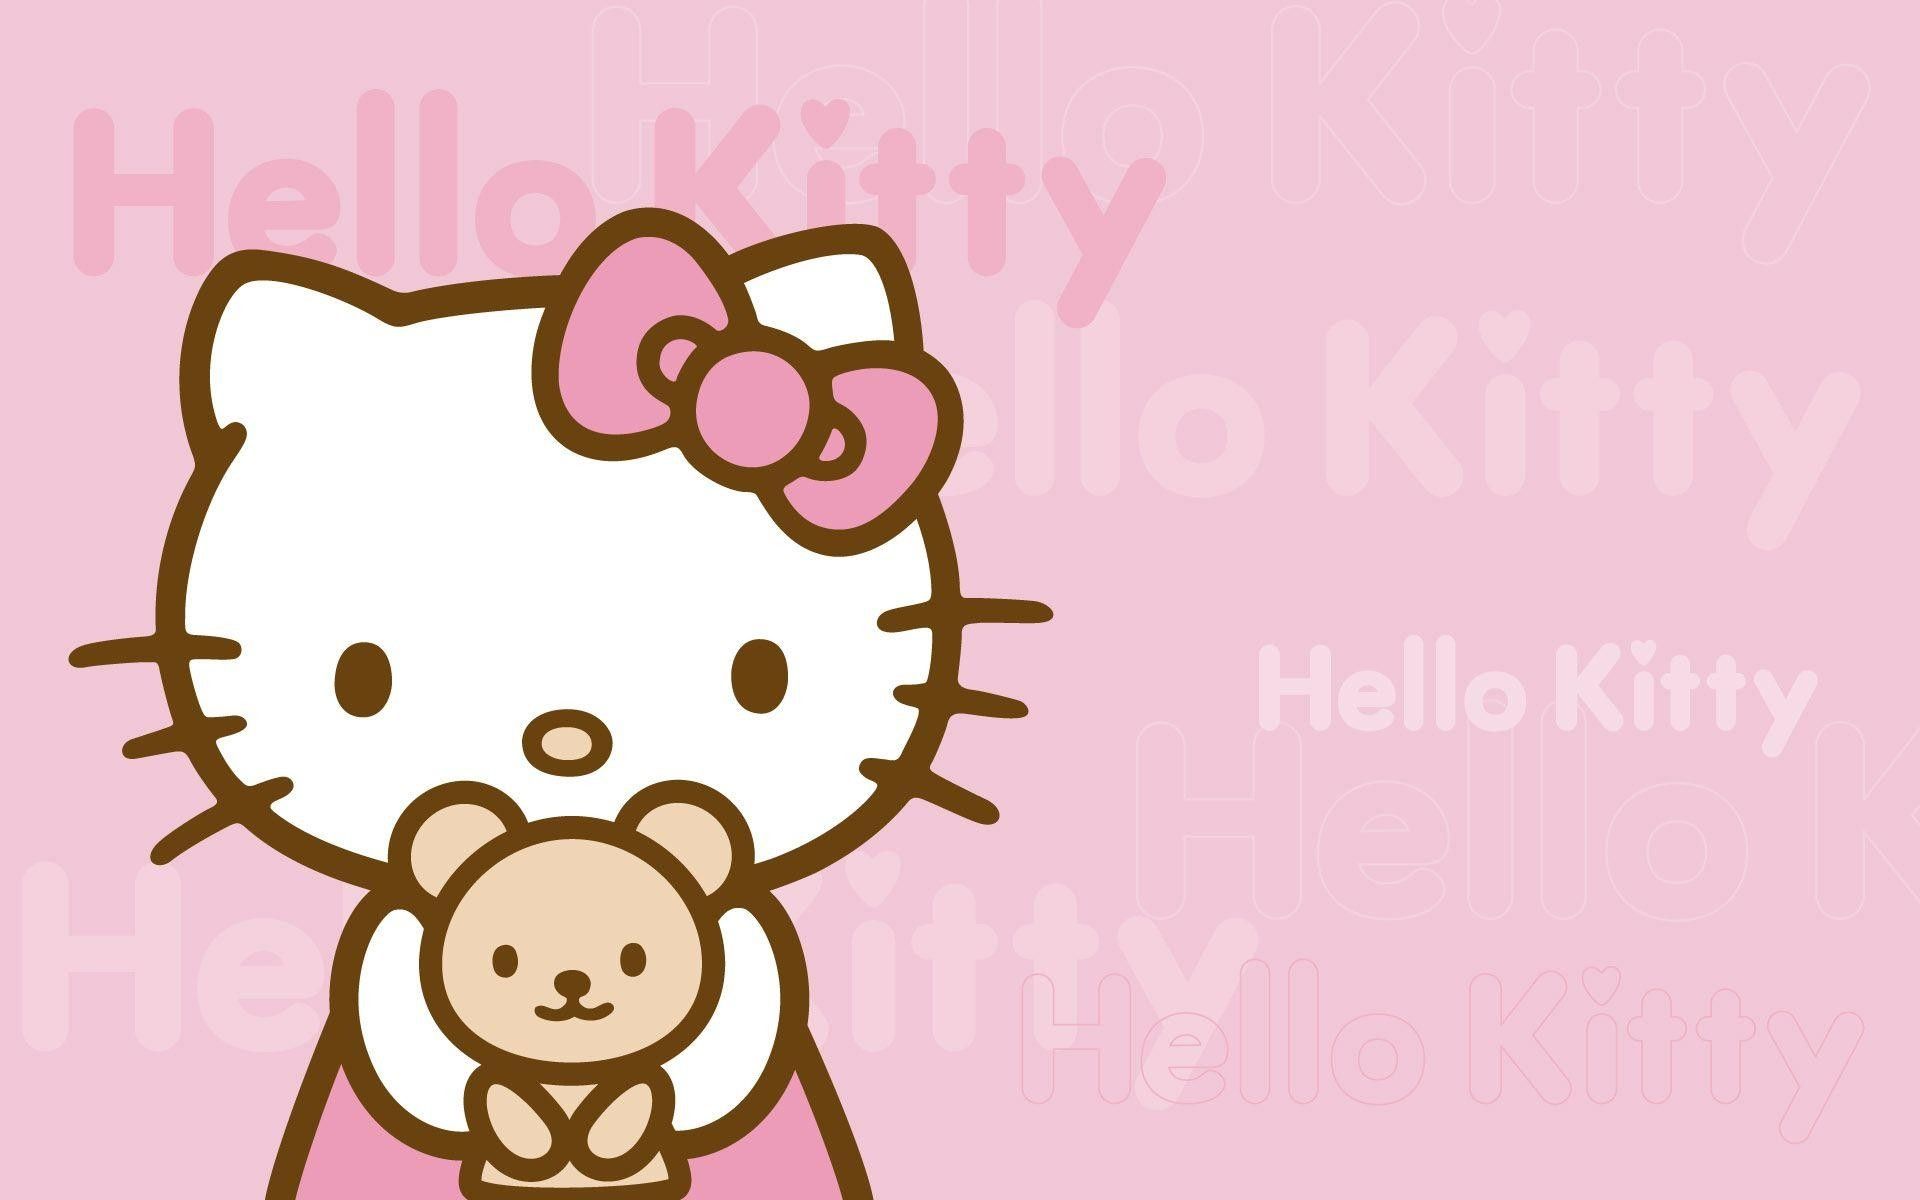 Hello Kitty  widgetopia homescreen widgets for iPhone  iPad  Android